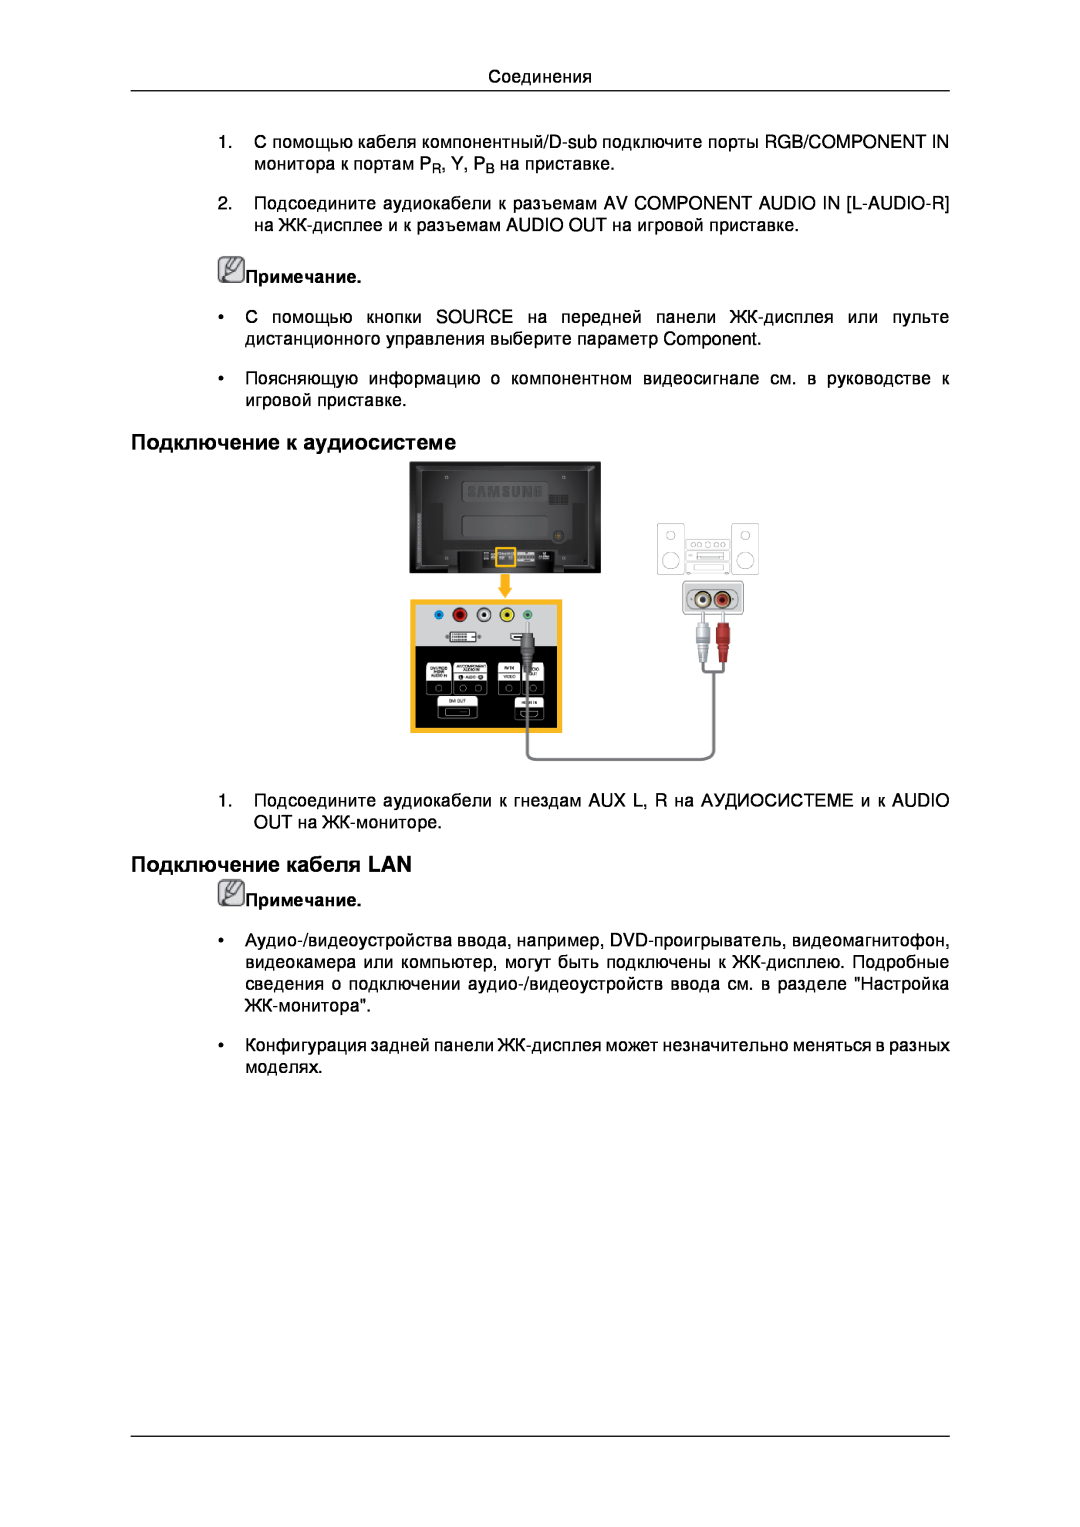 Samsung LH46MSTLBB/EN, LH40MRTLBC/EN, LH40MRPLBF/EN manual Подключение к аудиосистеме, Подключение кабеля LAN, Примечание 